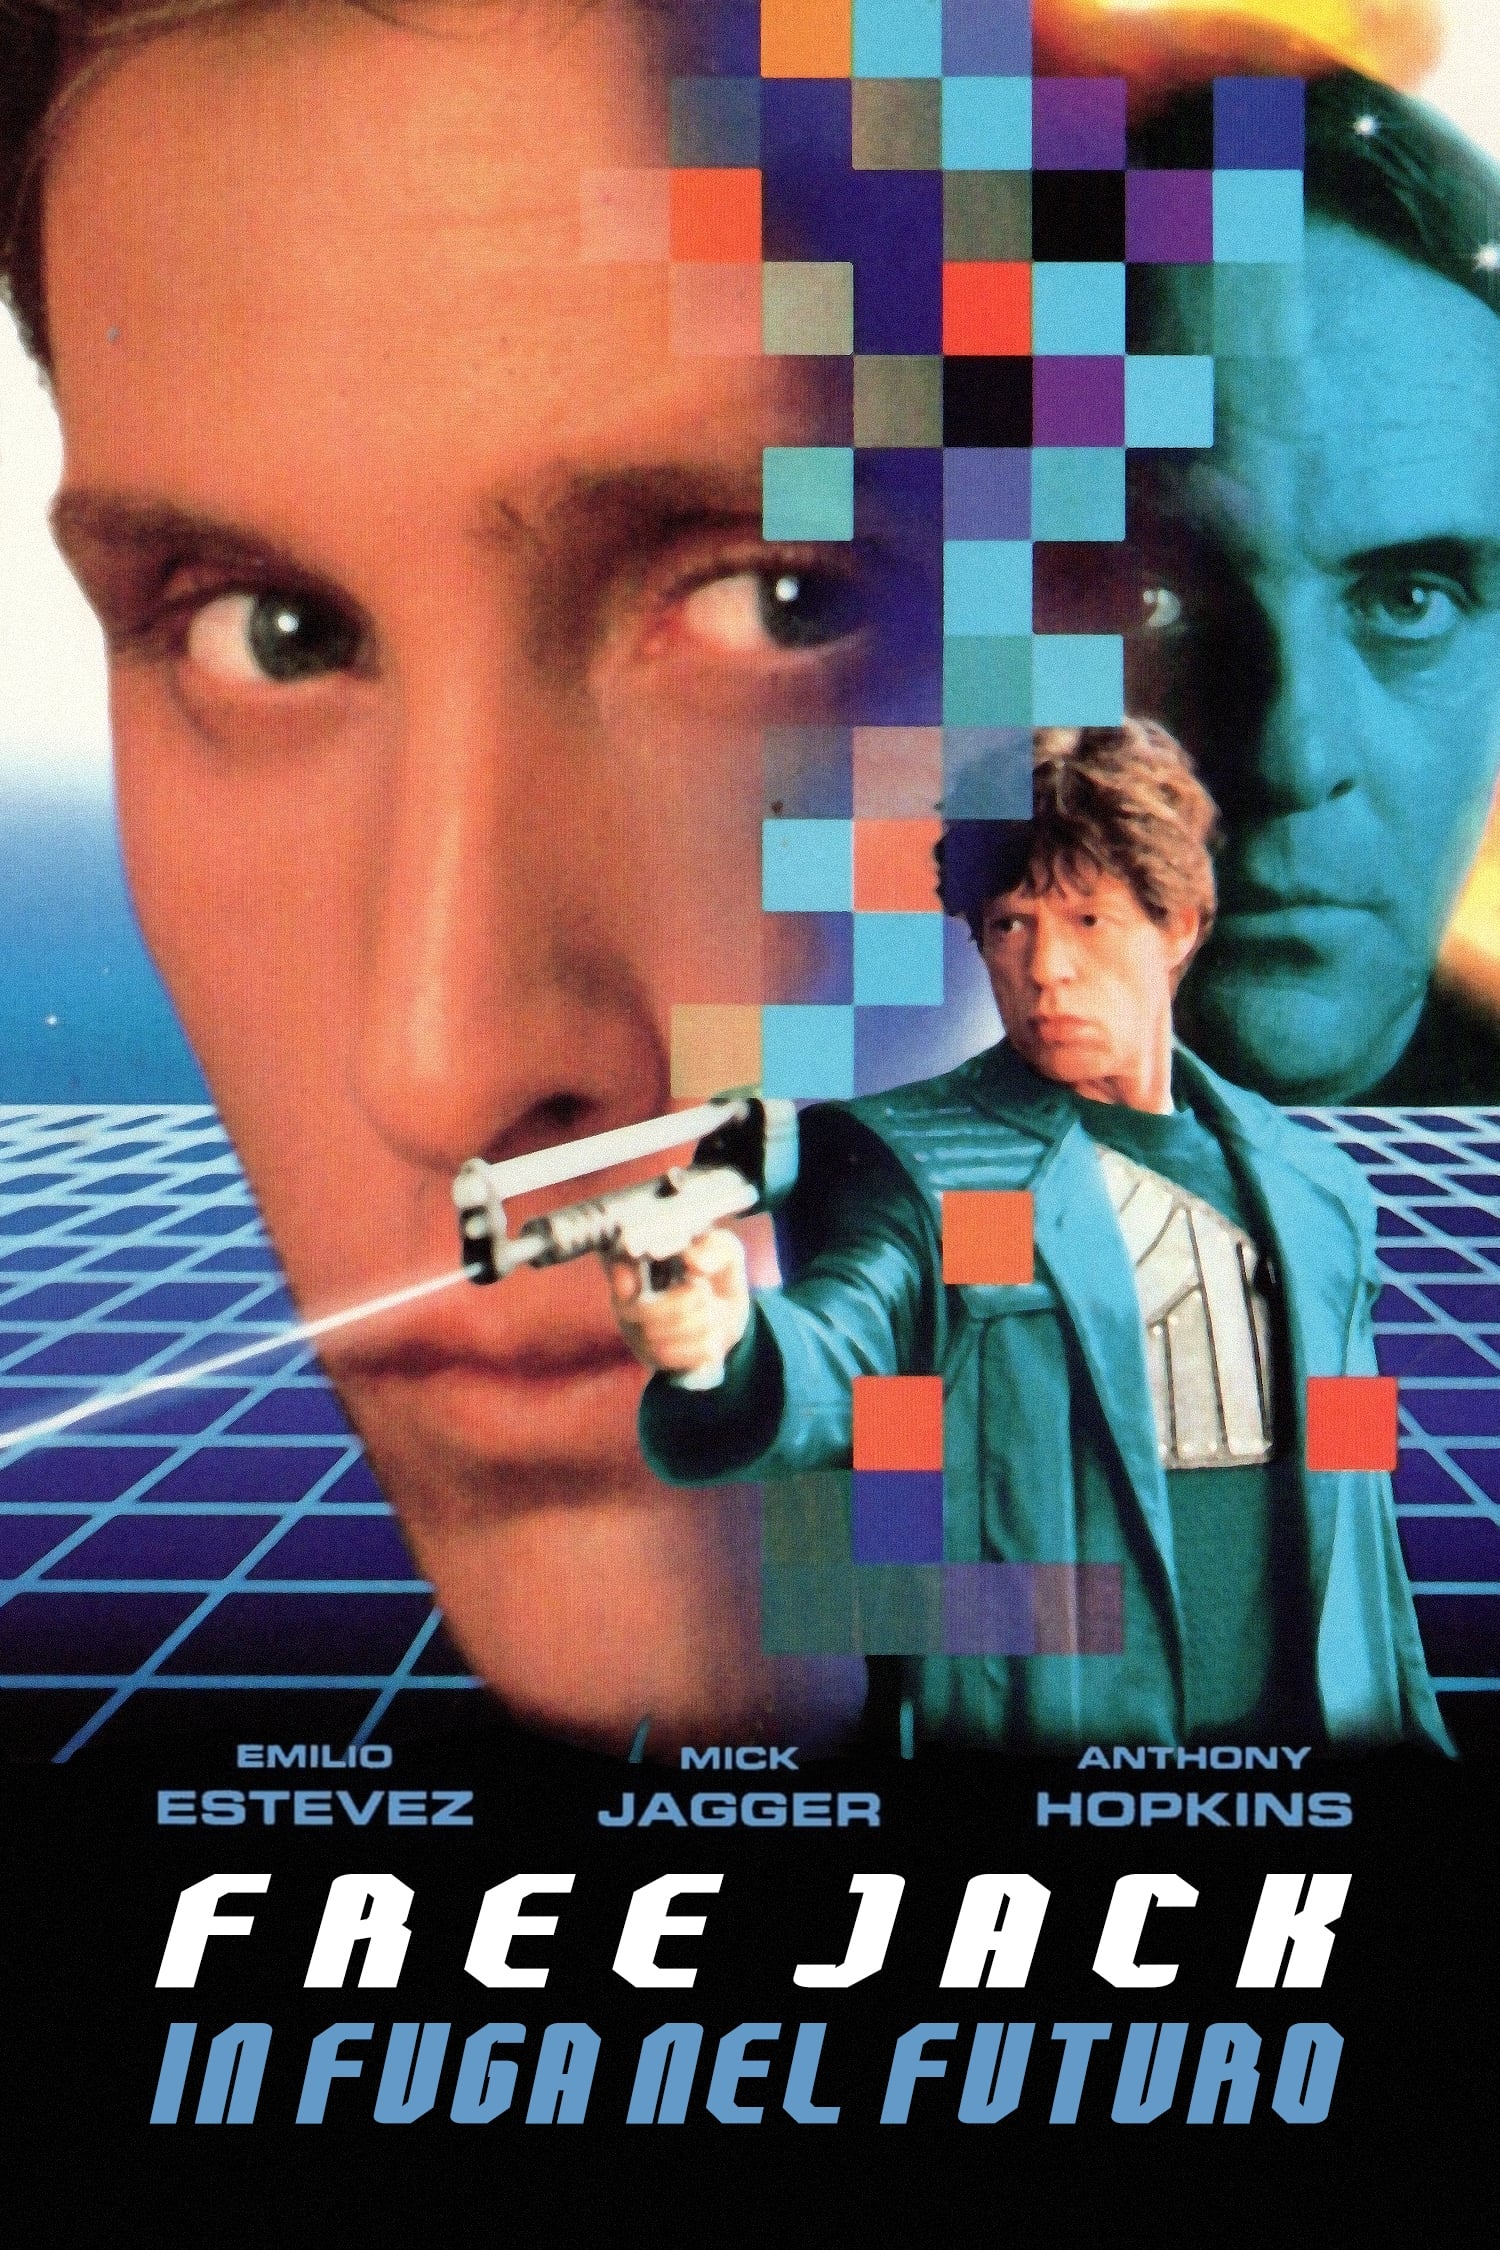 Freejack – In fuga nel futuro [HD] (1992)